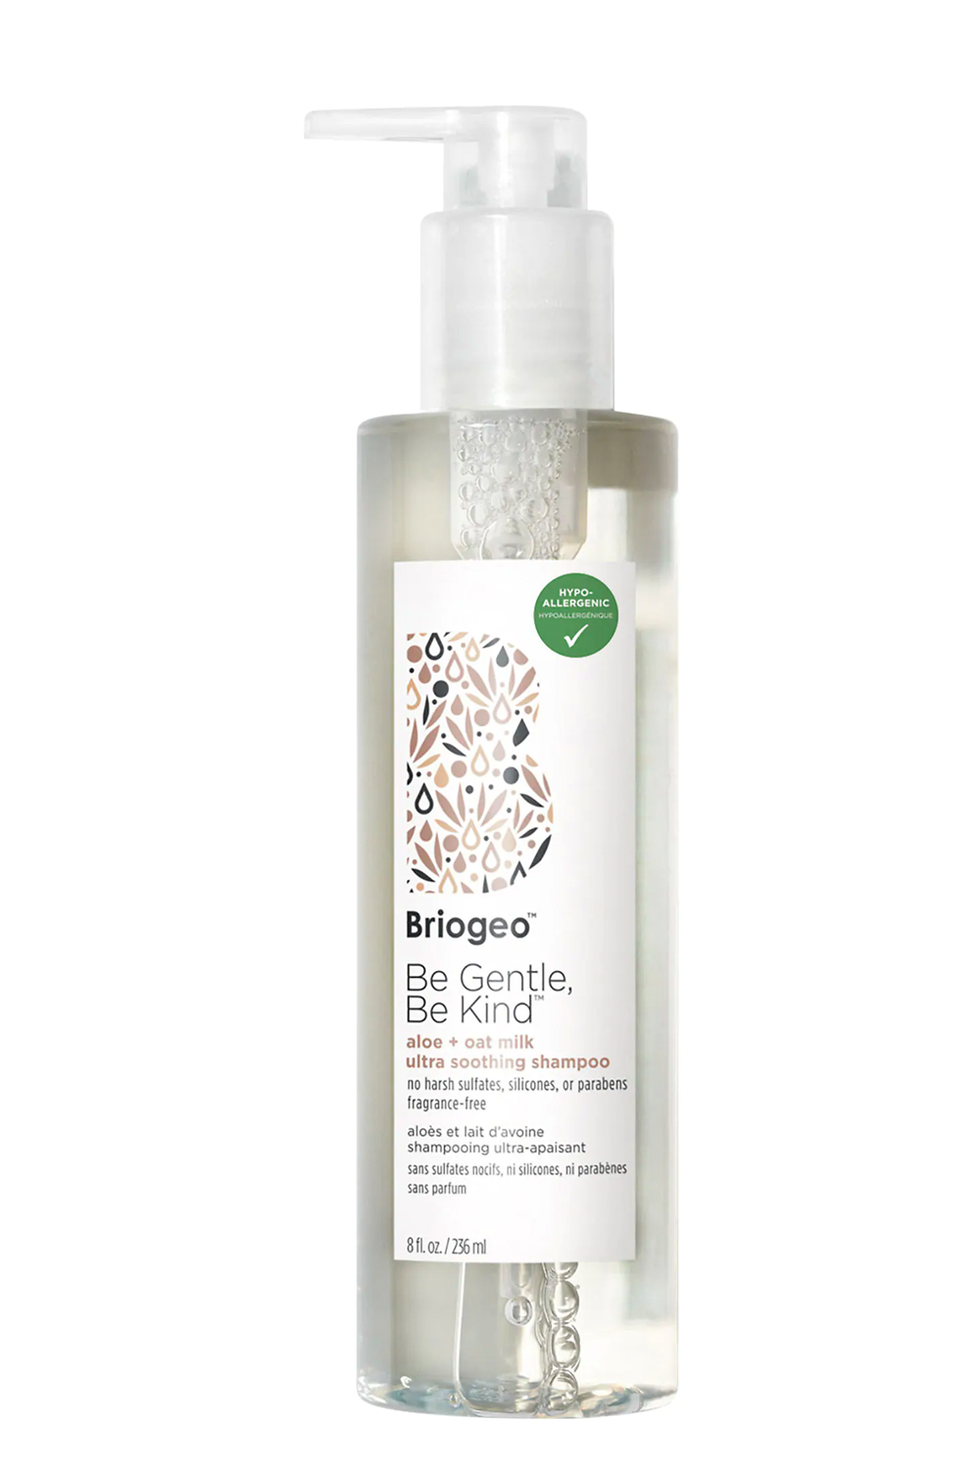 Briogeo Be Gentle, Be Kind Aloe + Oat Milk Ultra Soothing Fragrance-Fee Hypoallergenic Shampoo